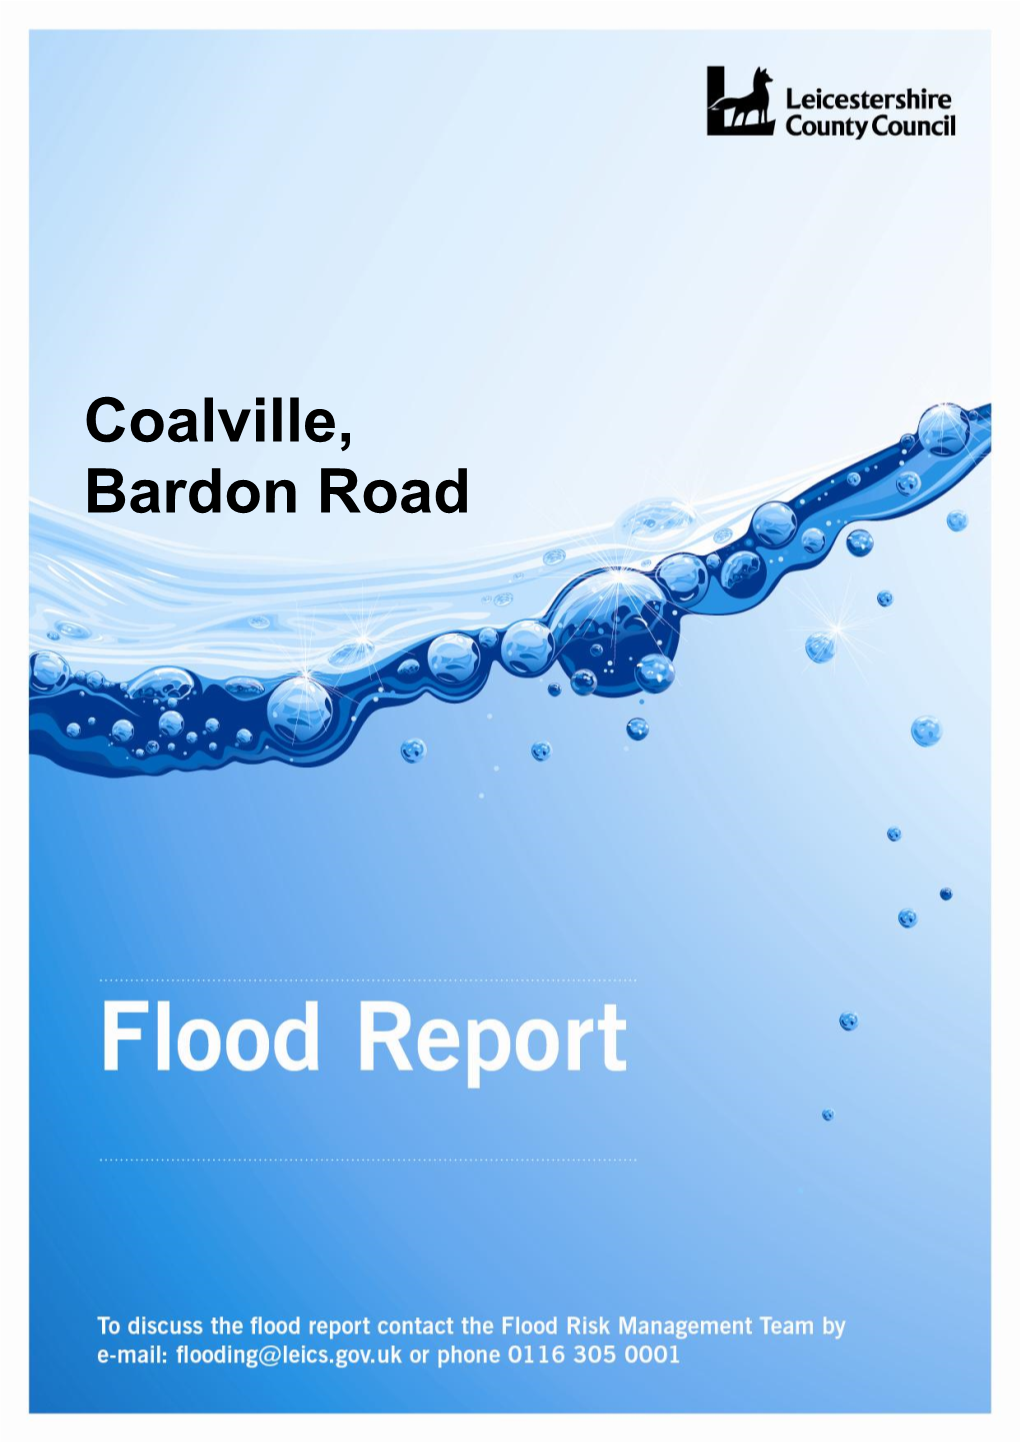 Bardon Road, Coalville on 28Th June 2012